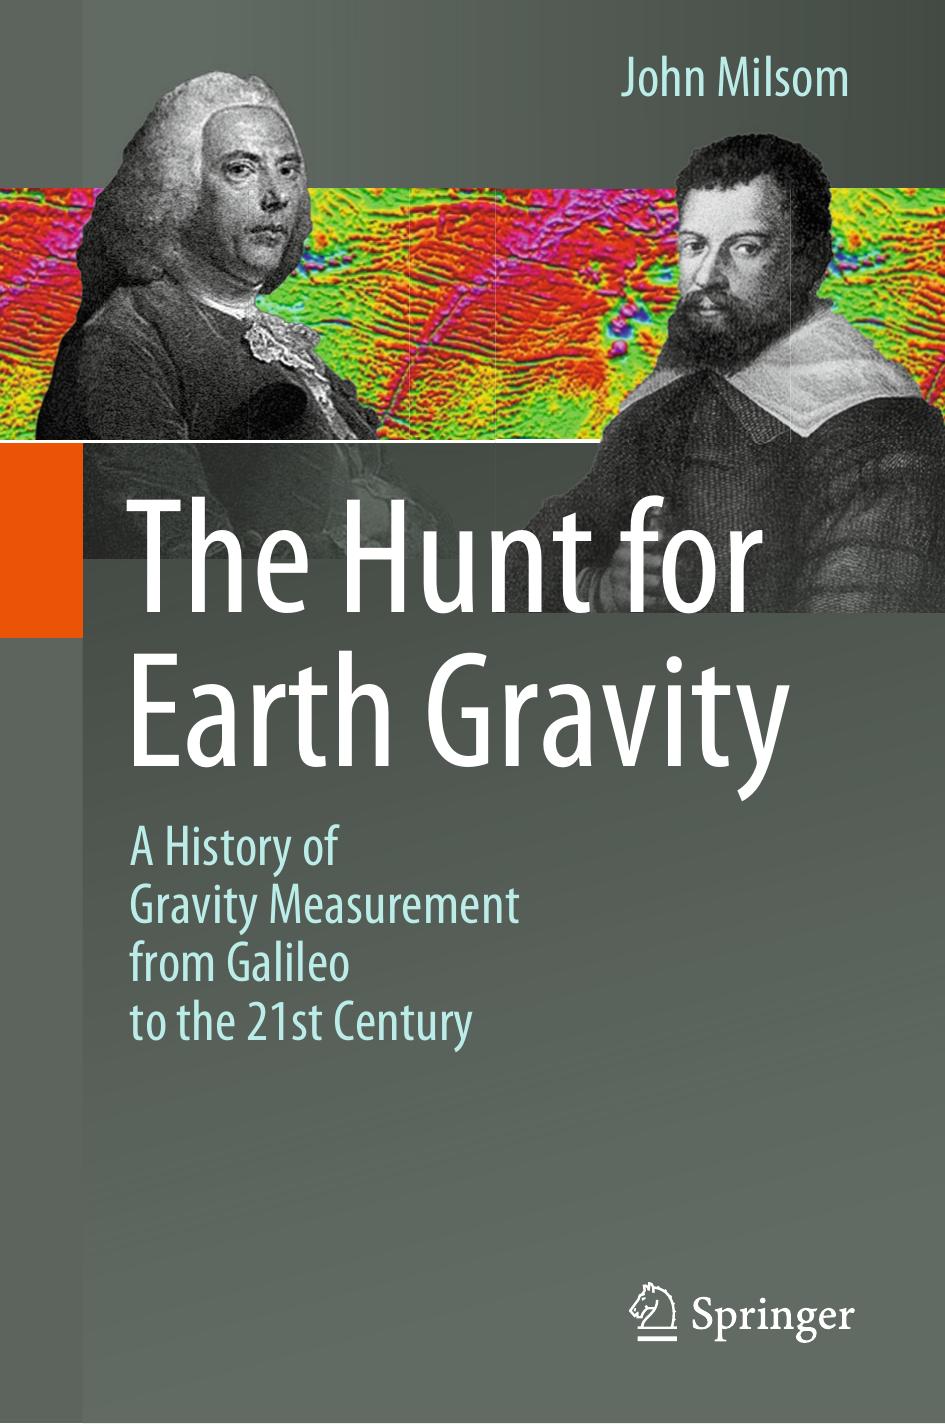 The Hunt for Earth Gravity by John Milsom